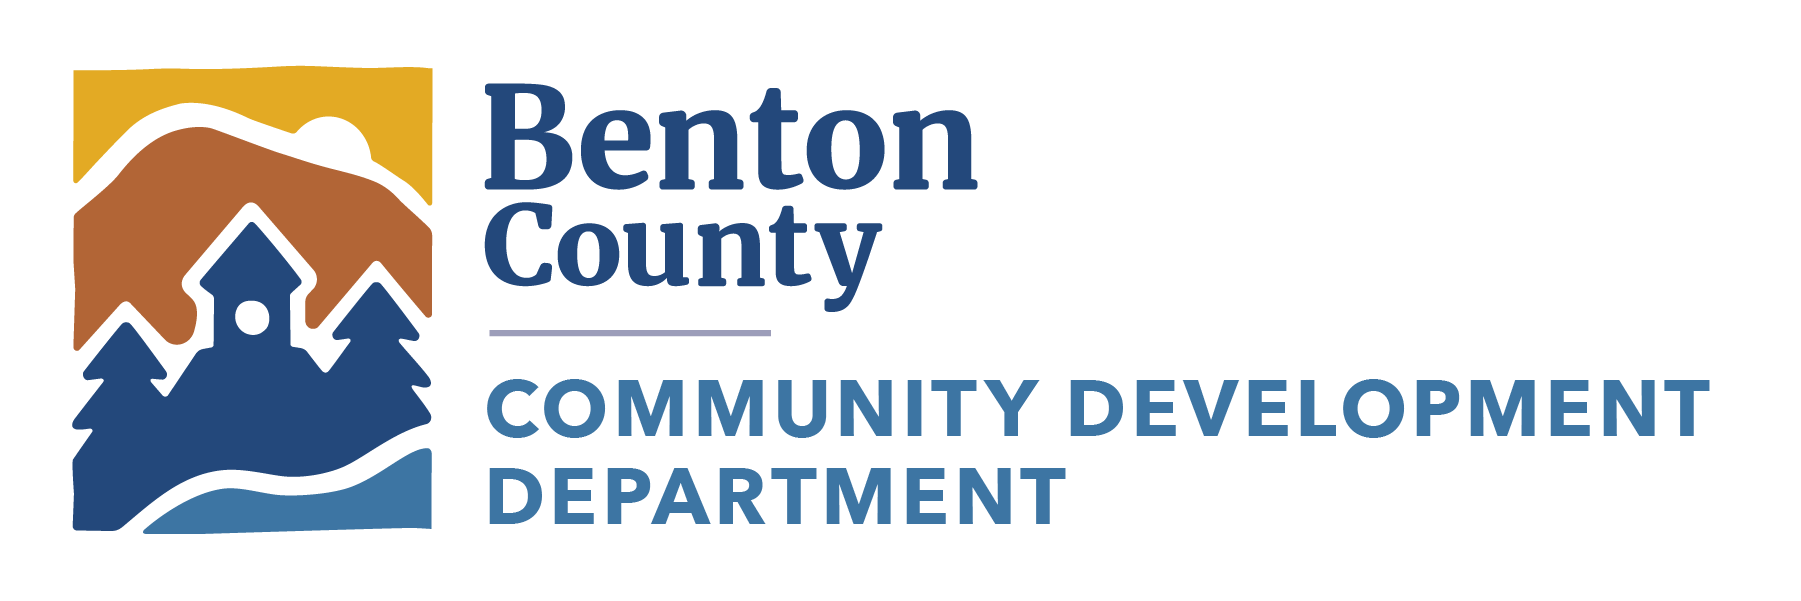 Benton County Community Development logo.